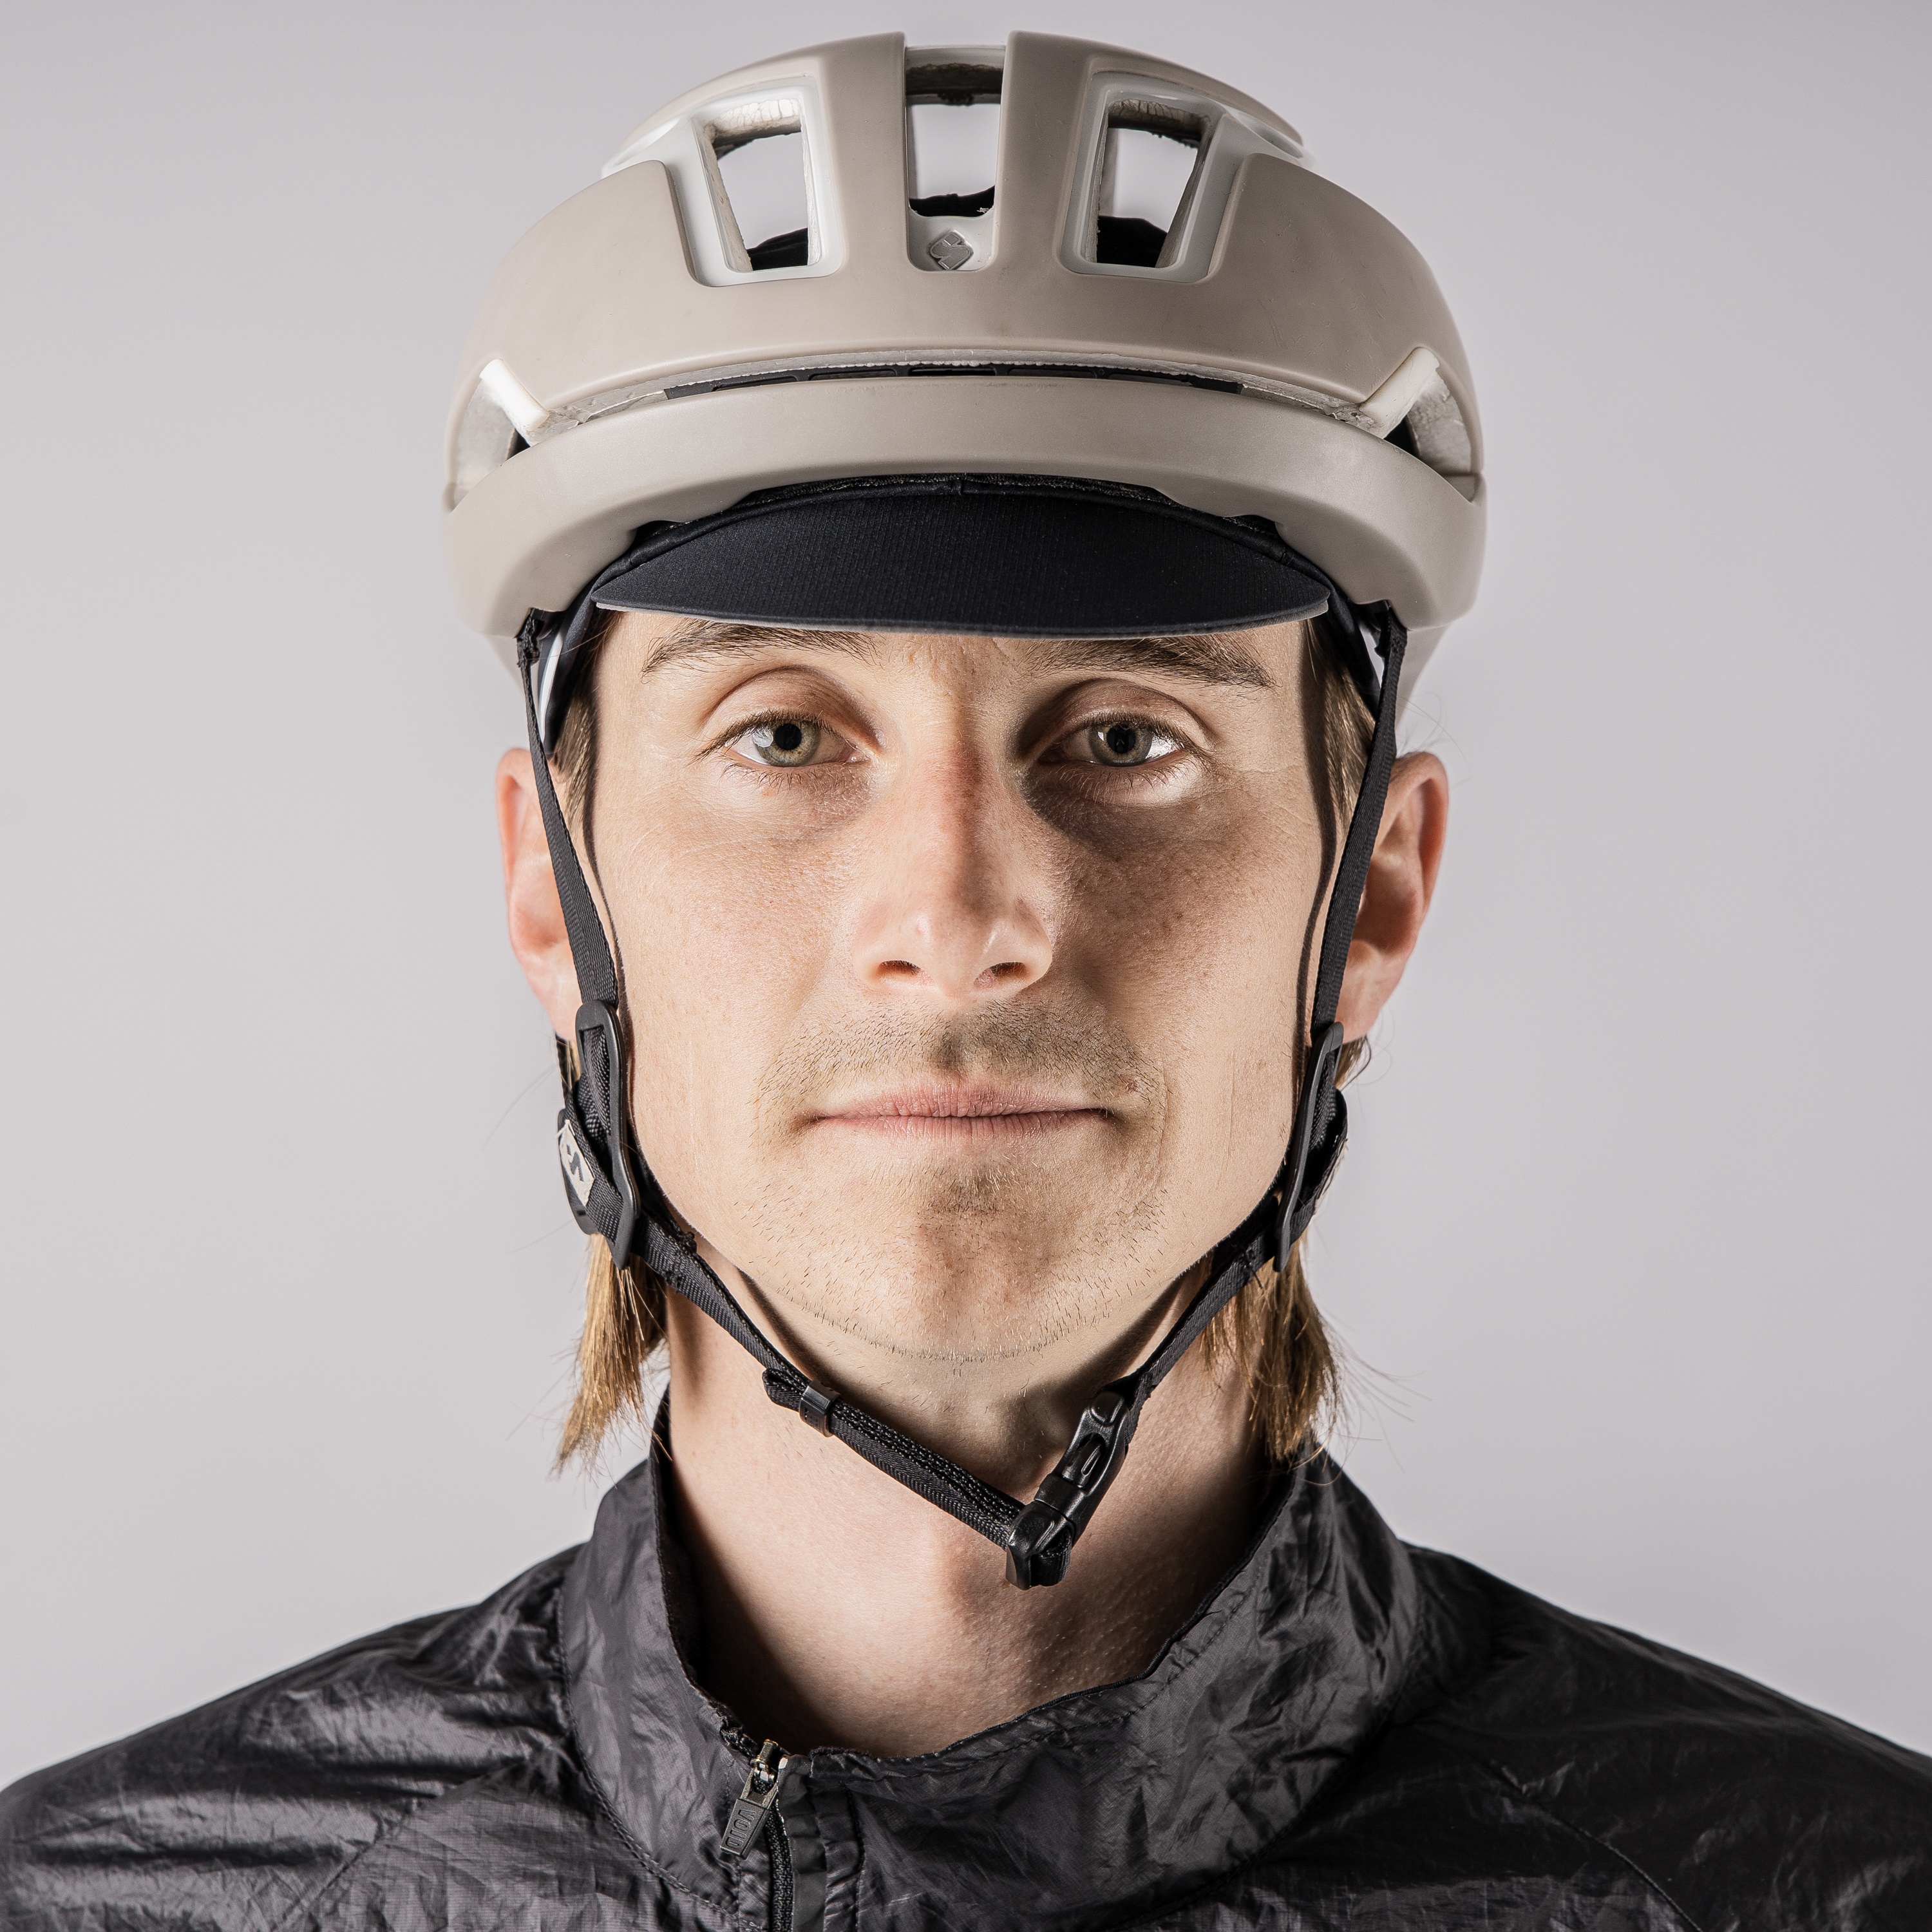 Beklædning - Cykelkasketter - GripGrab AquaShield vandtæt cykelkasket - Sort